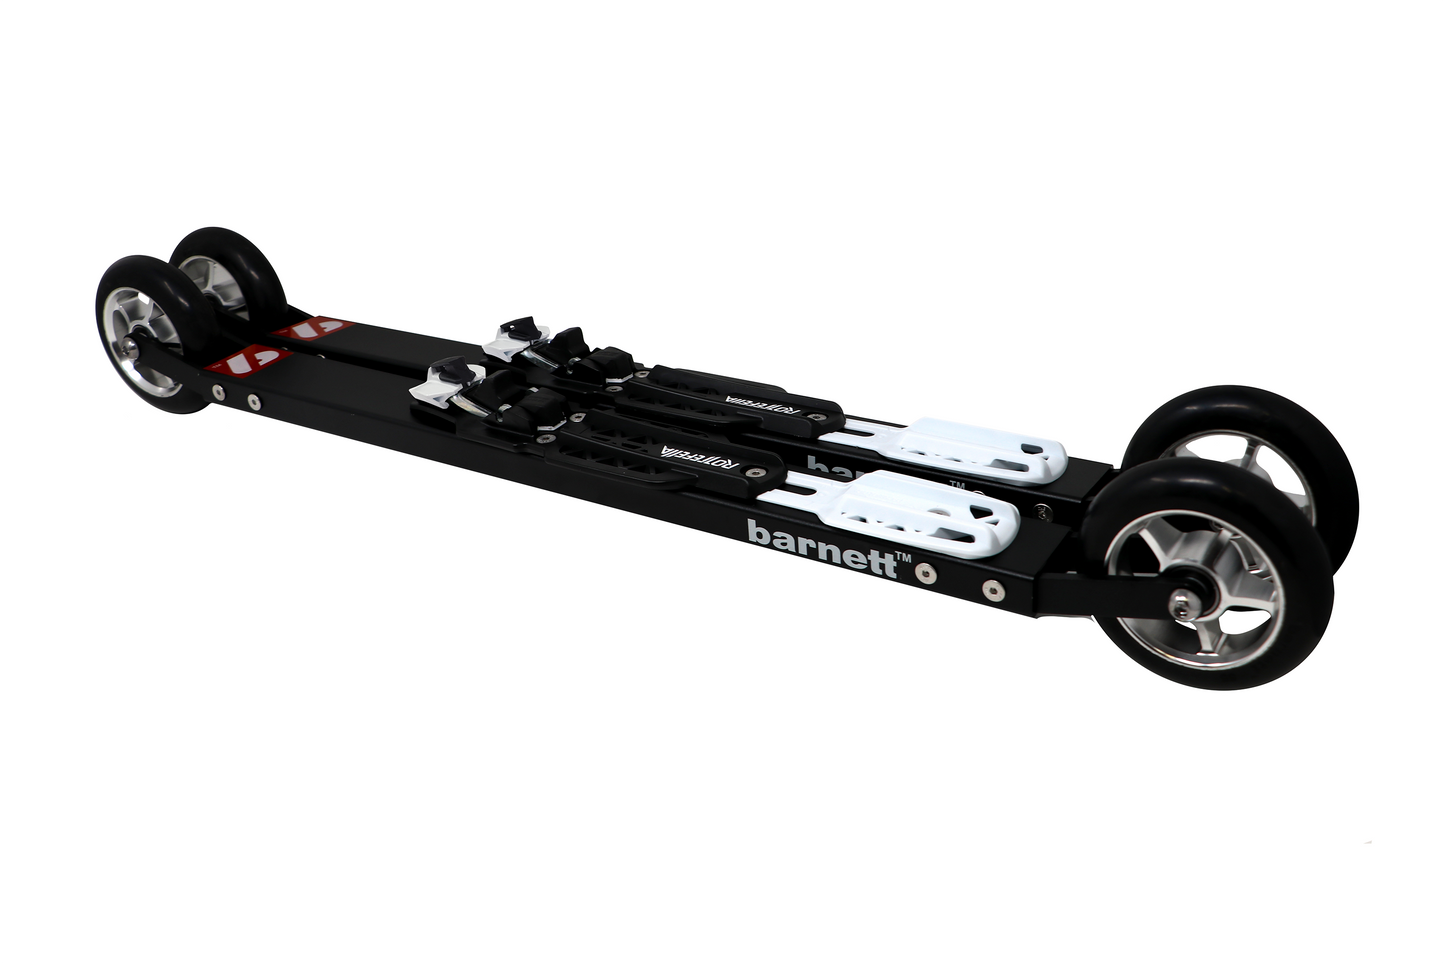 RSE-610 Binding NNN Roller ski, BLACK